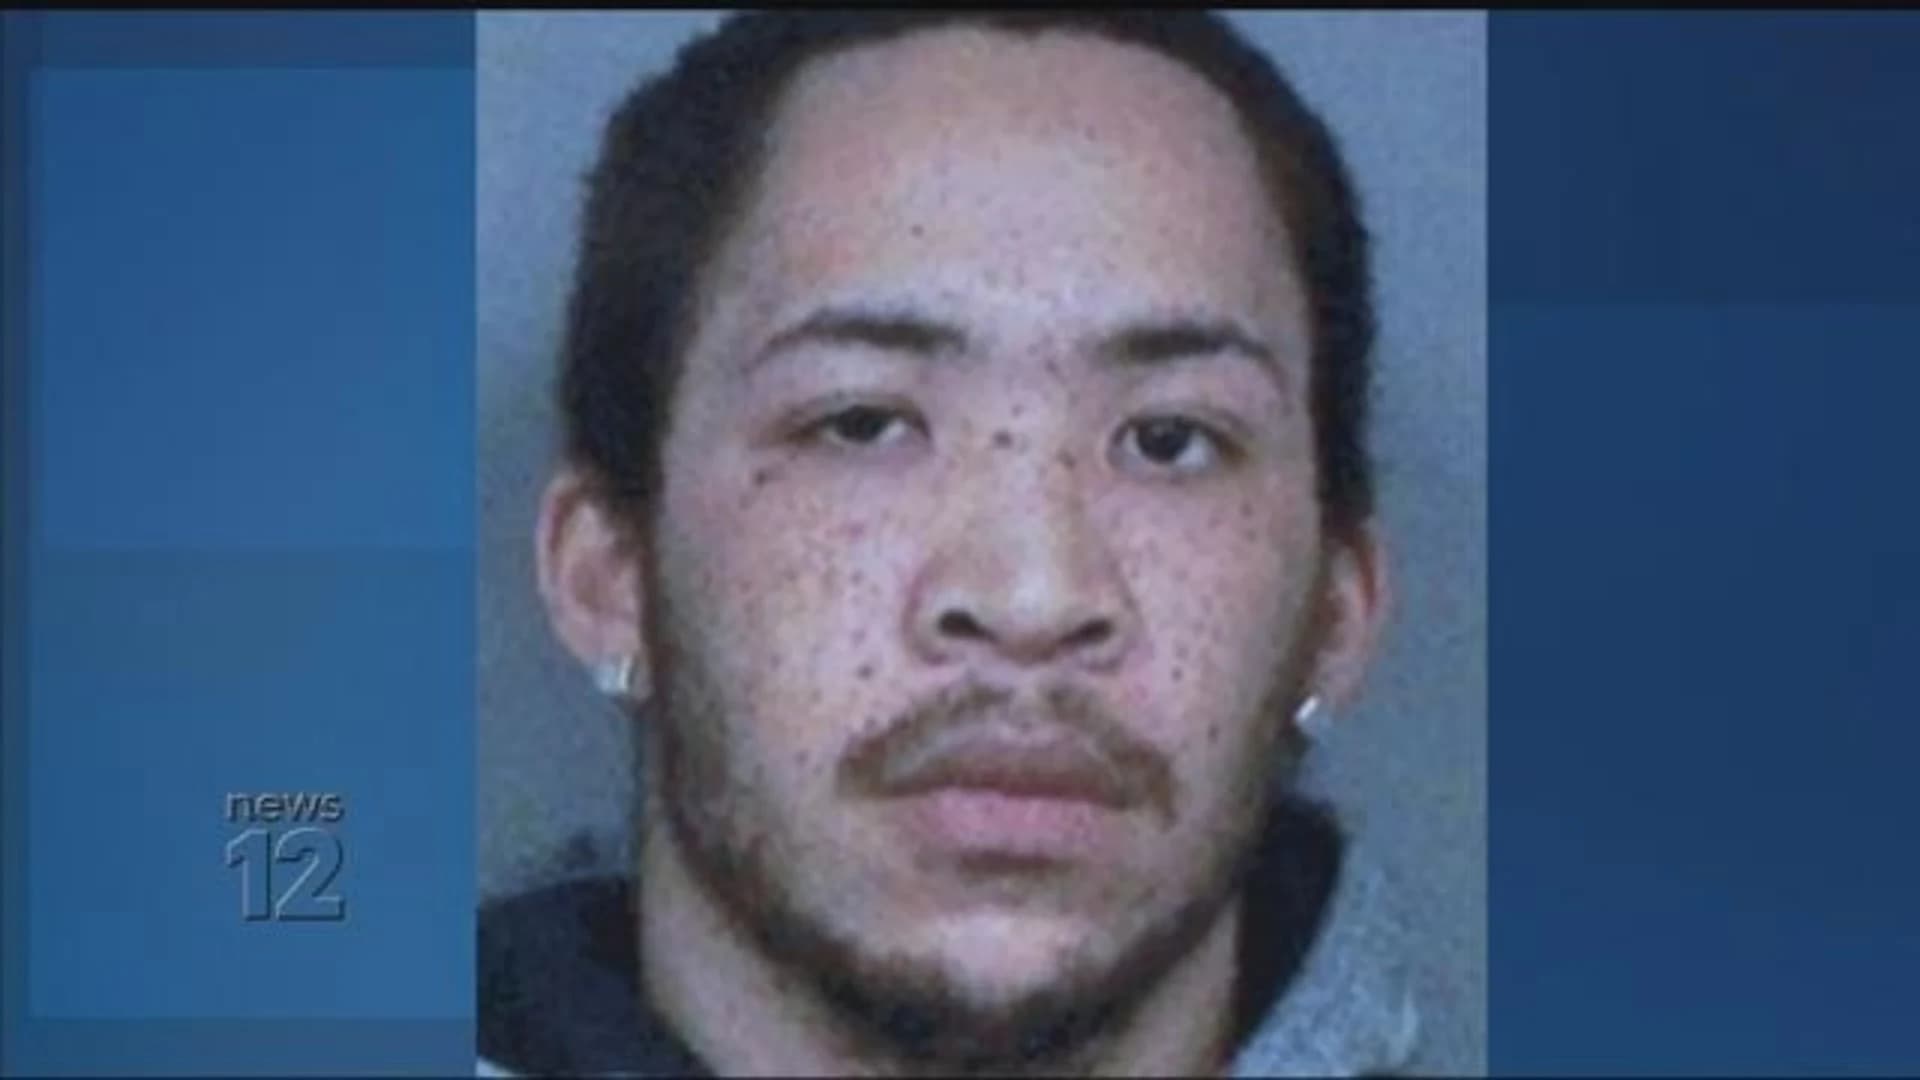 ‘Armed and dangerous’ – Manhunt underway for murder suspect